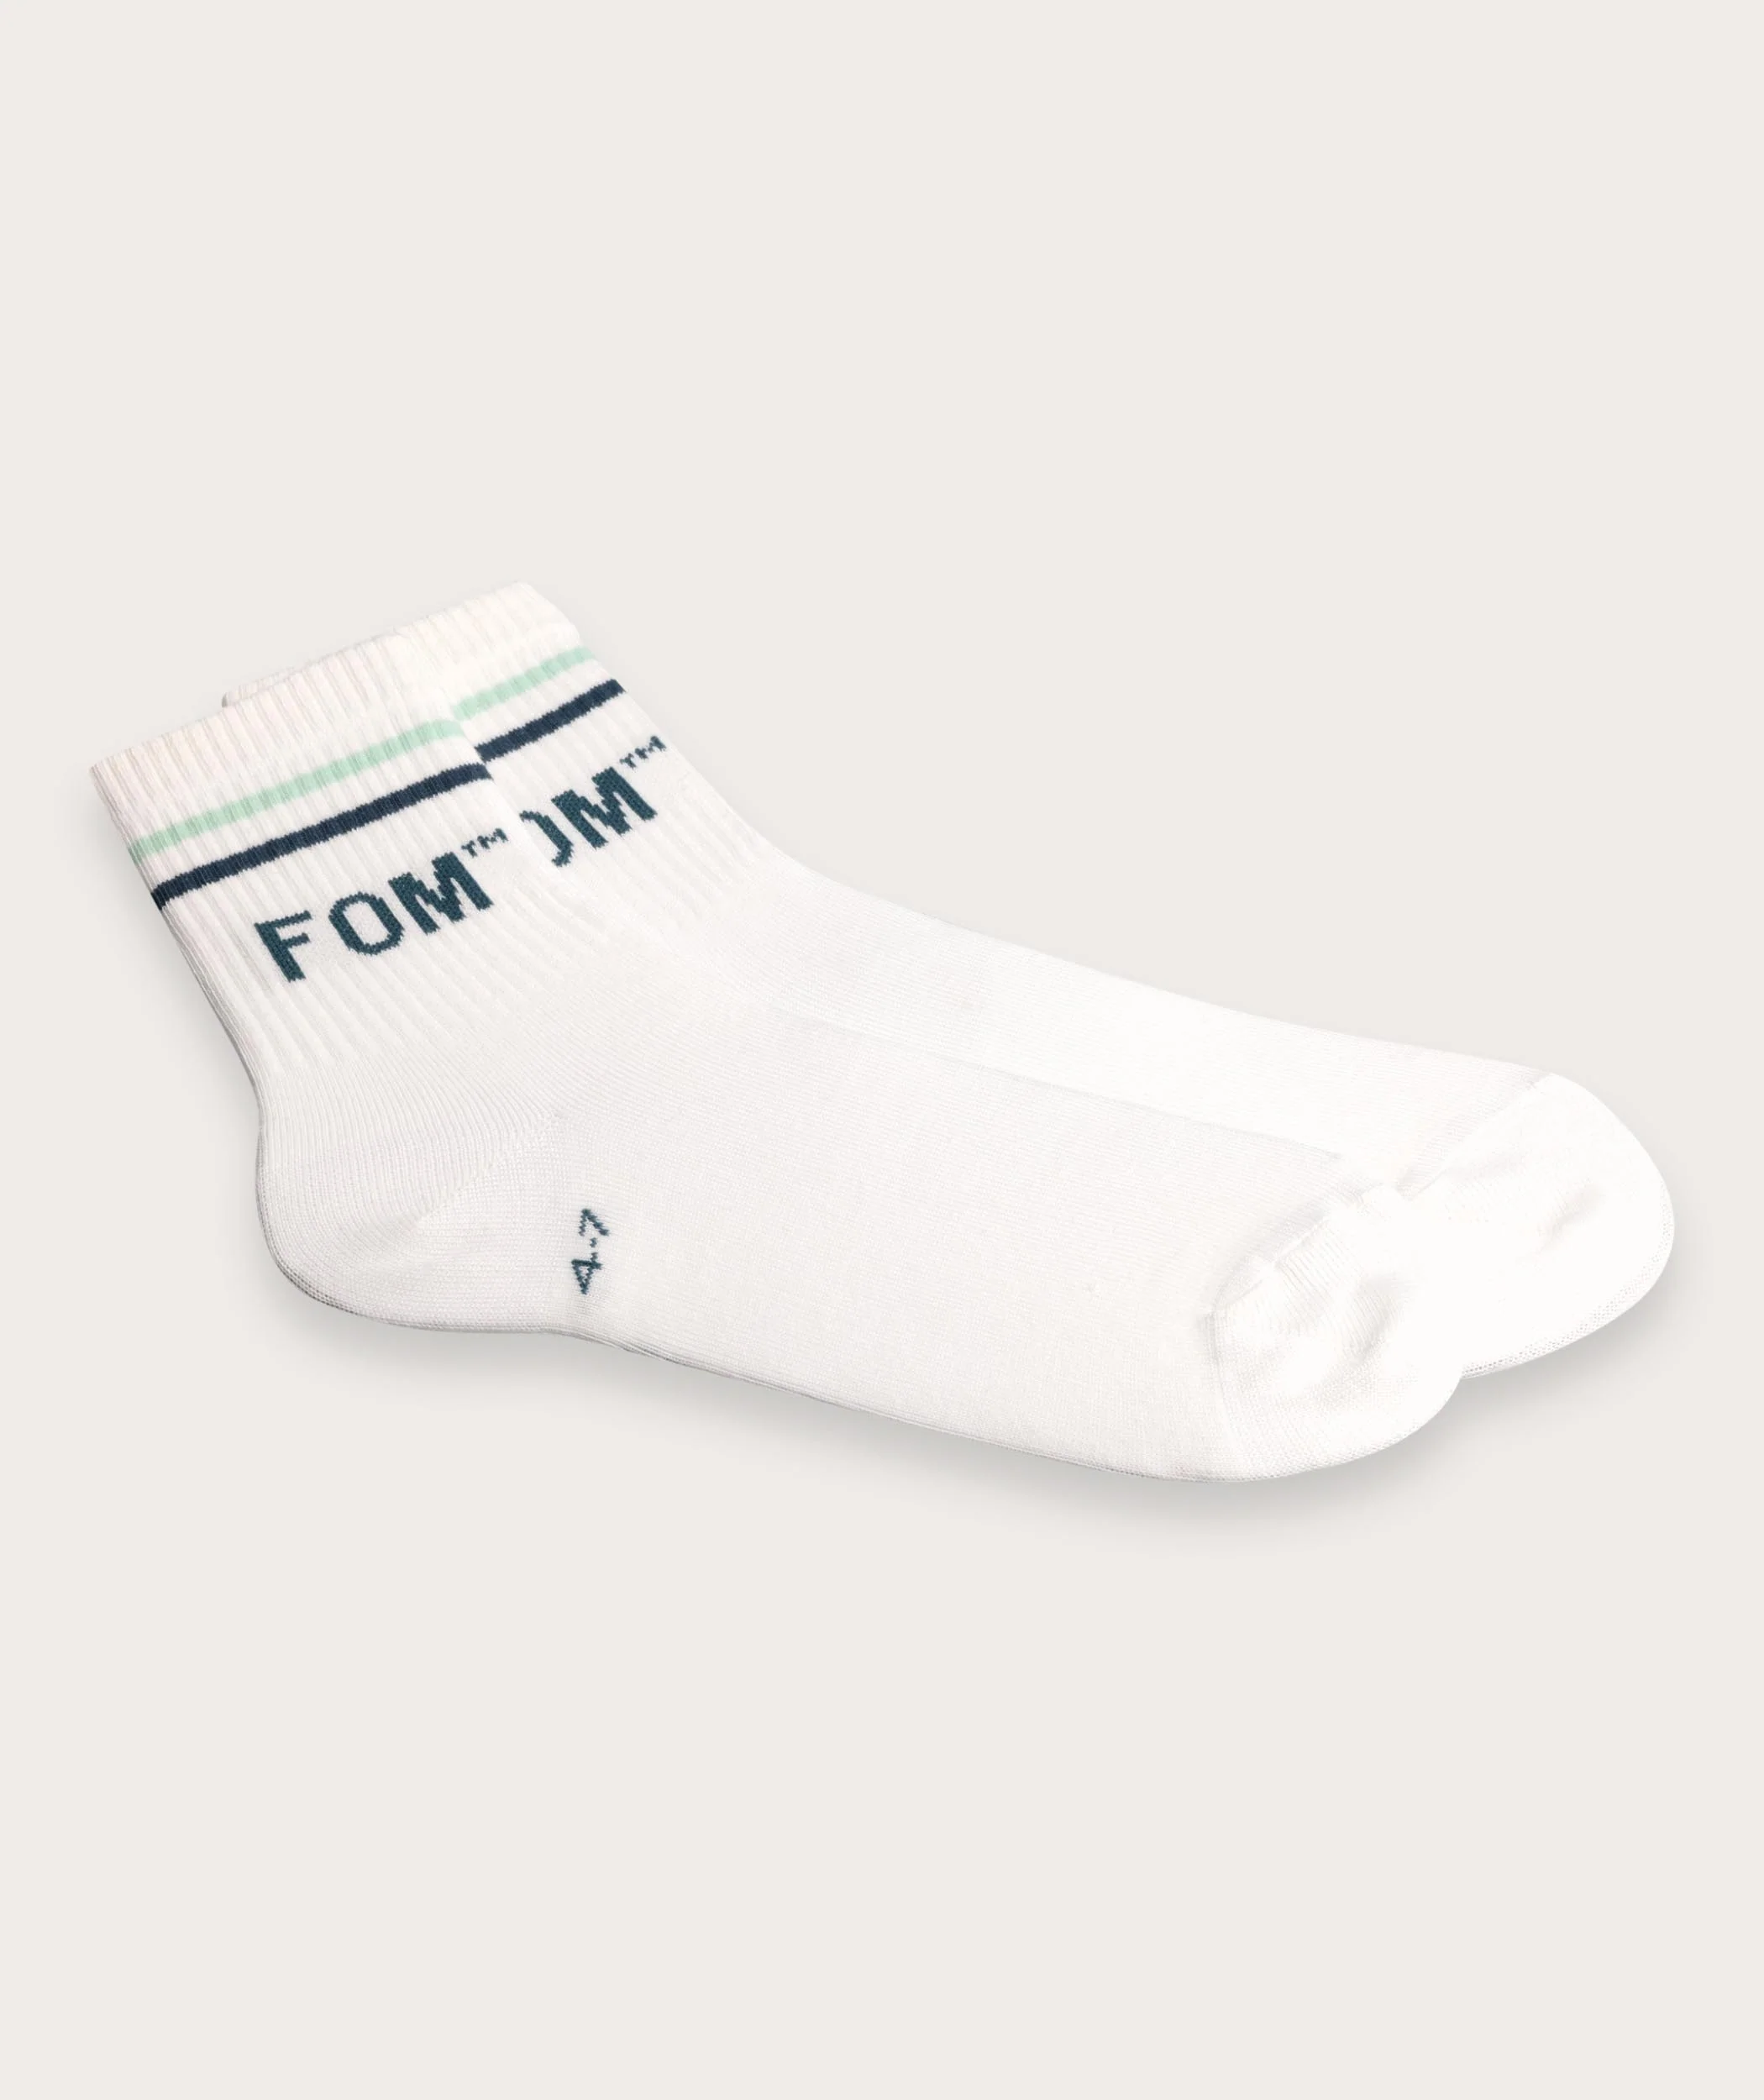 Socks FOM Active Ivory/ Mint & Teal (Size 4-7)